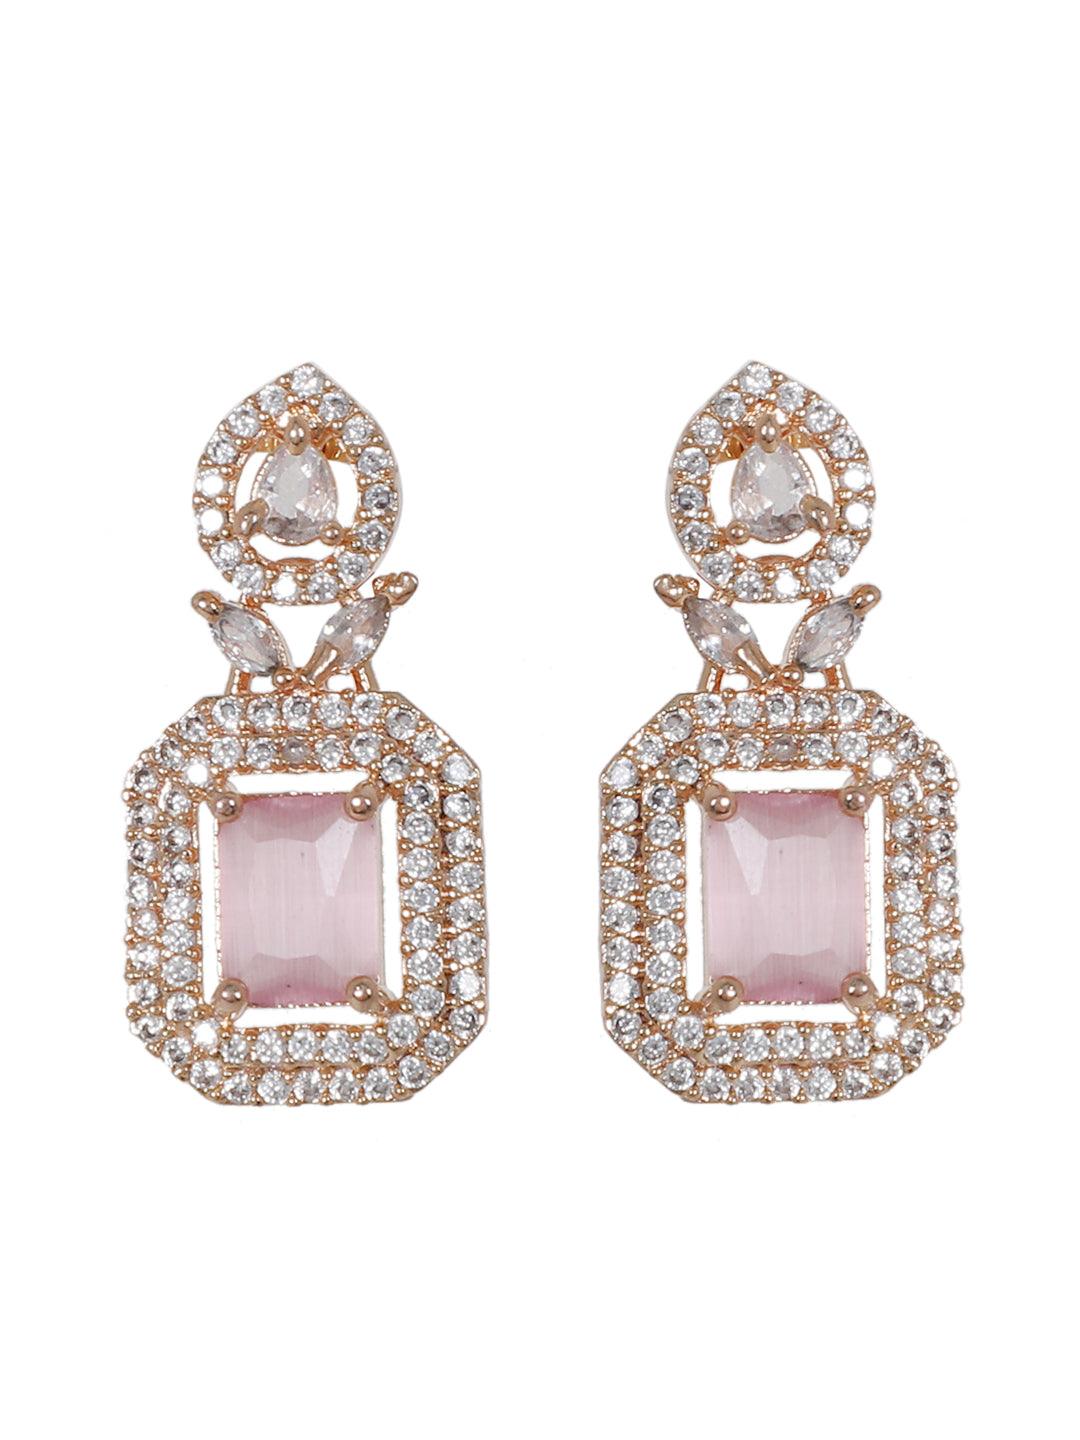 Judith Ripka 4ctw Square Pink Bella Luce Diamond Simulant Rhodium Over  Silver Earrings w/White Topaz - 14TVXA | JTV.com